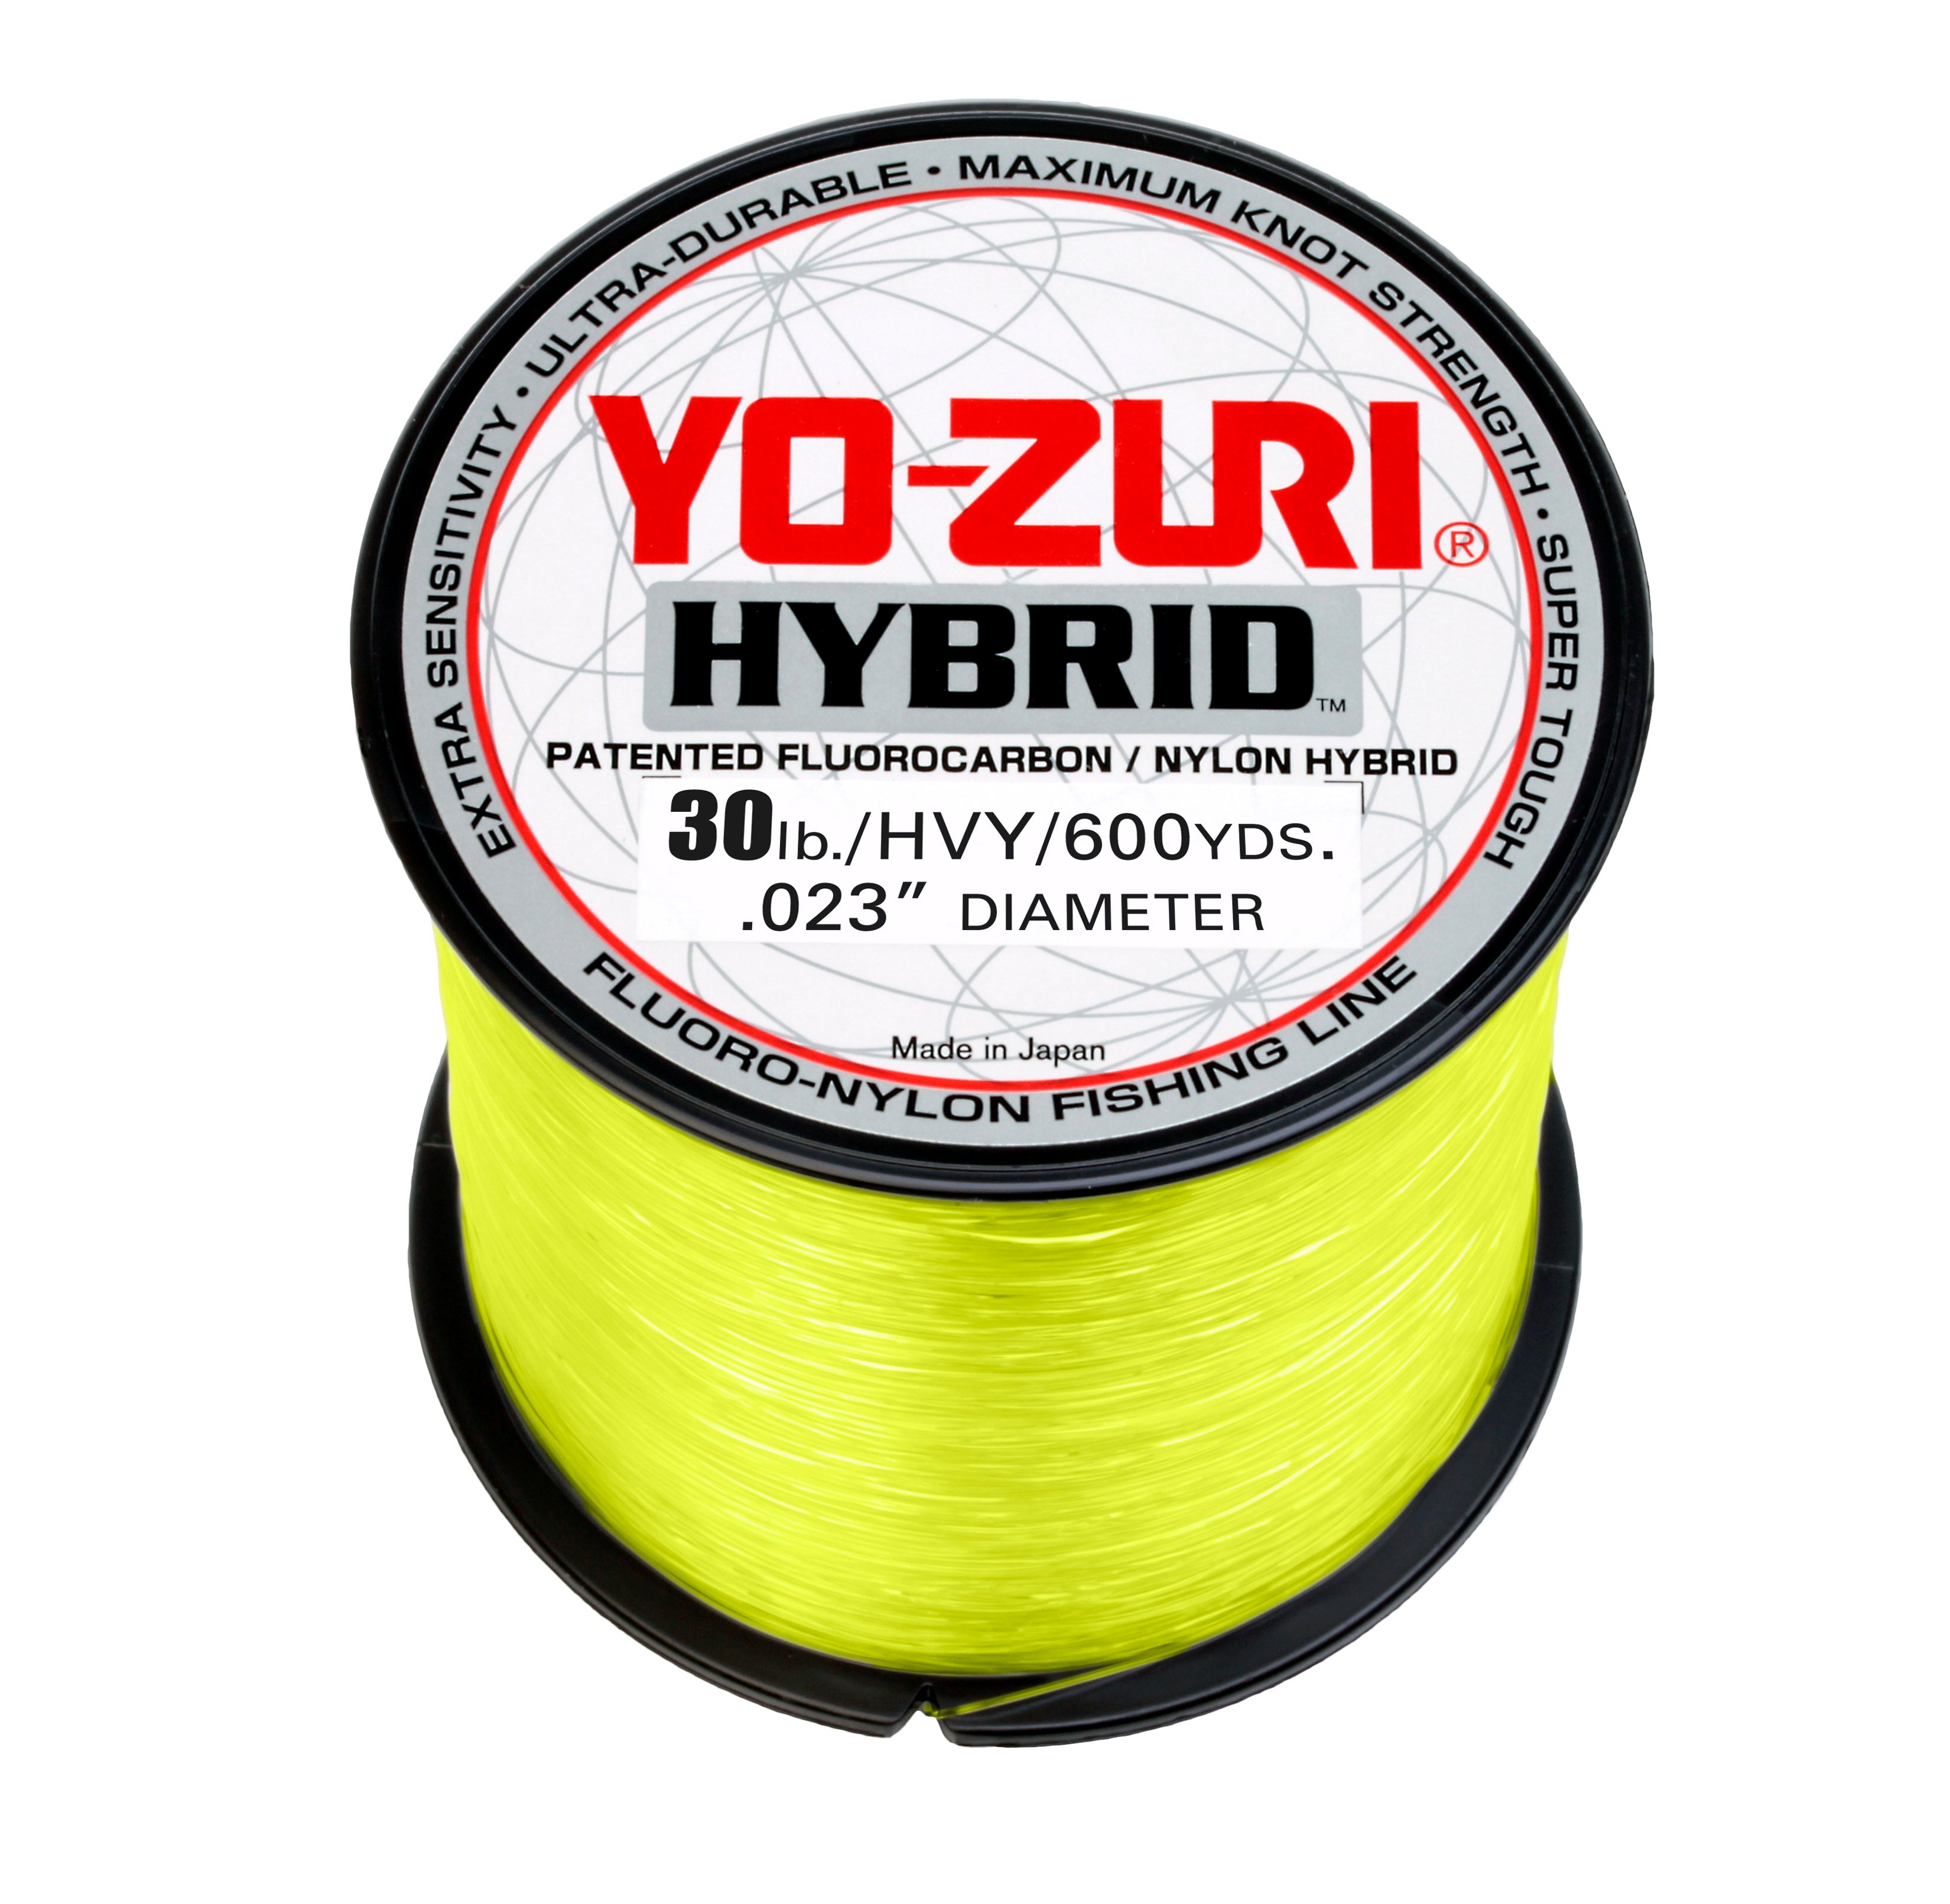 Yo-Zuri Hybrid Hi-Vis Yellow 600 Yards 20 Pound